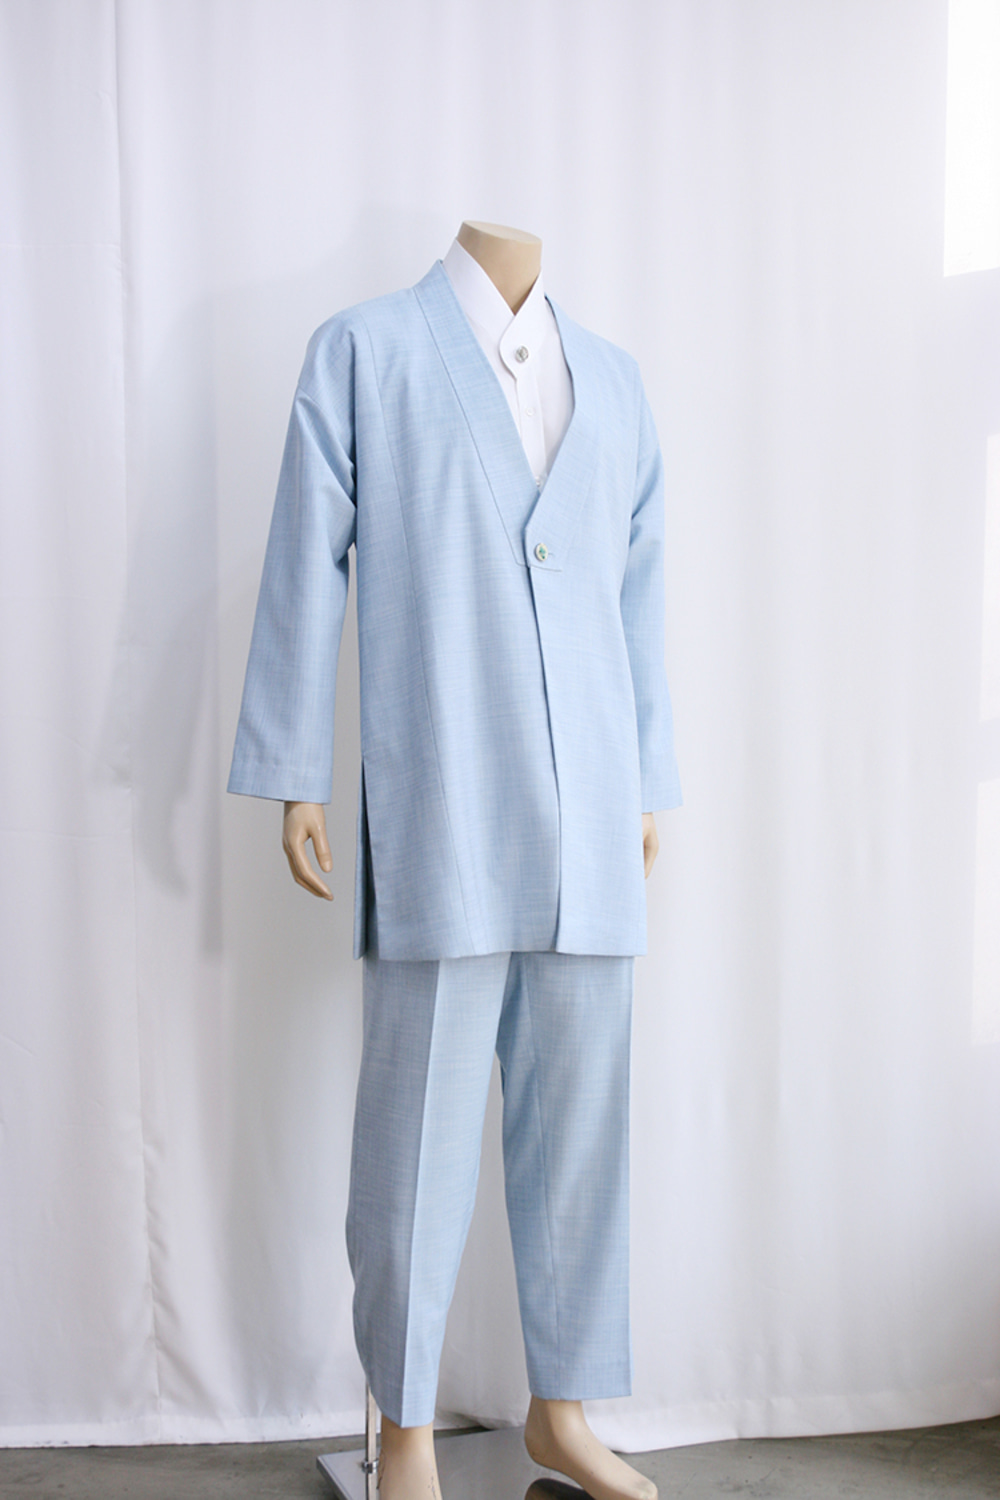 Rental] Sky Blue Mother-of-pearl Button Facing Collar Hanbok suit